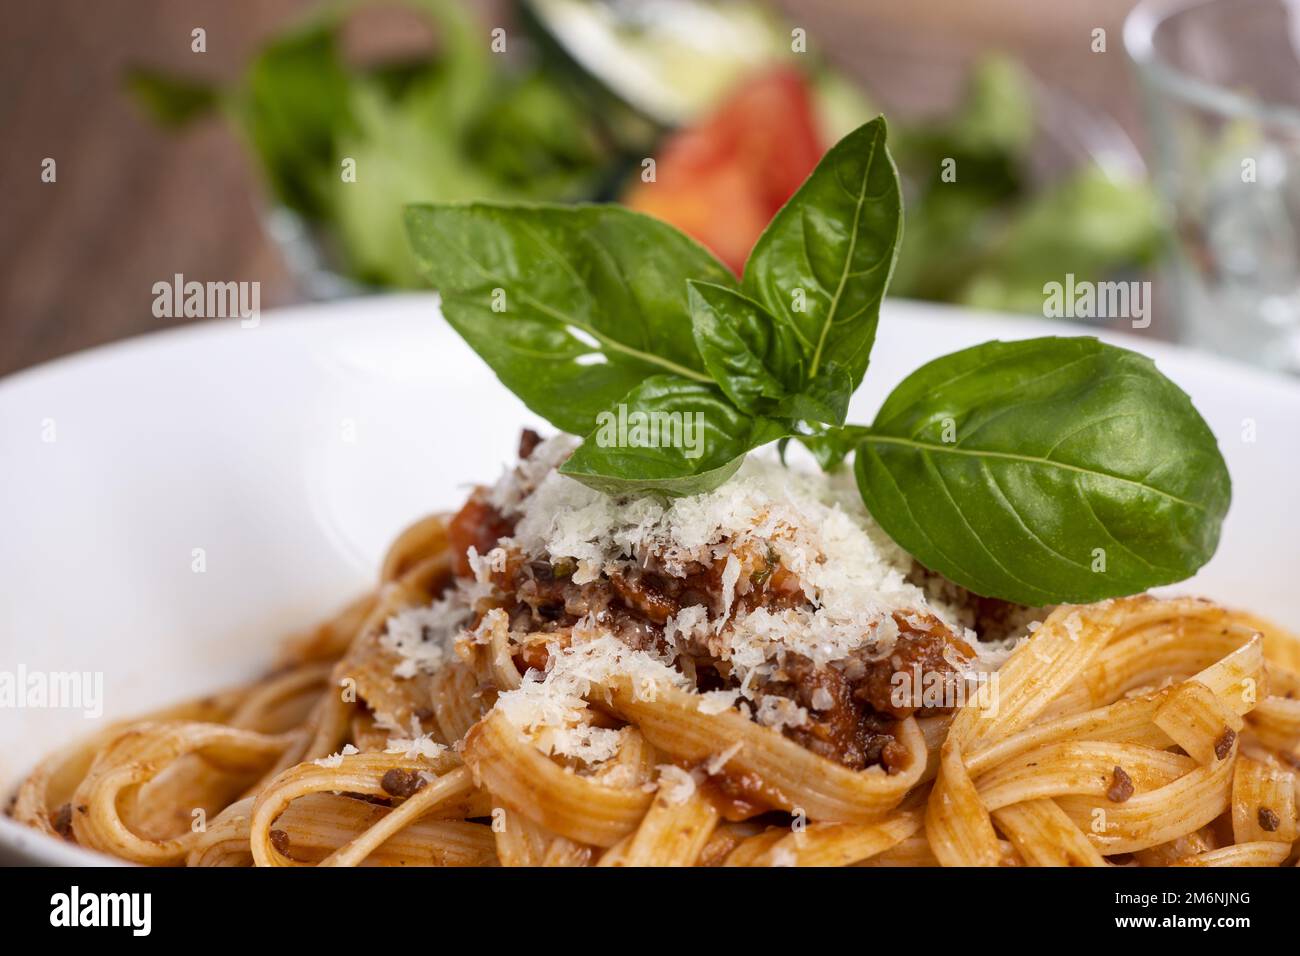 Tagliatelli pasta with bolognaise sauce on wood Stock Photo